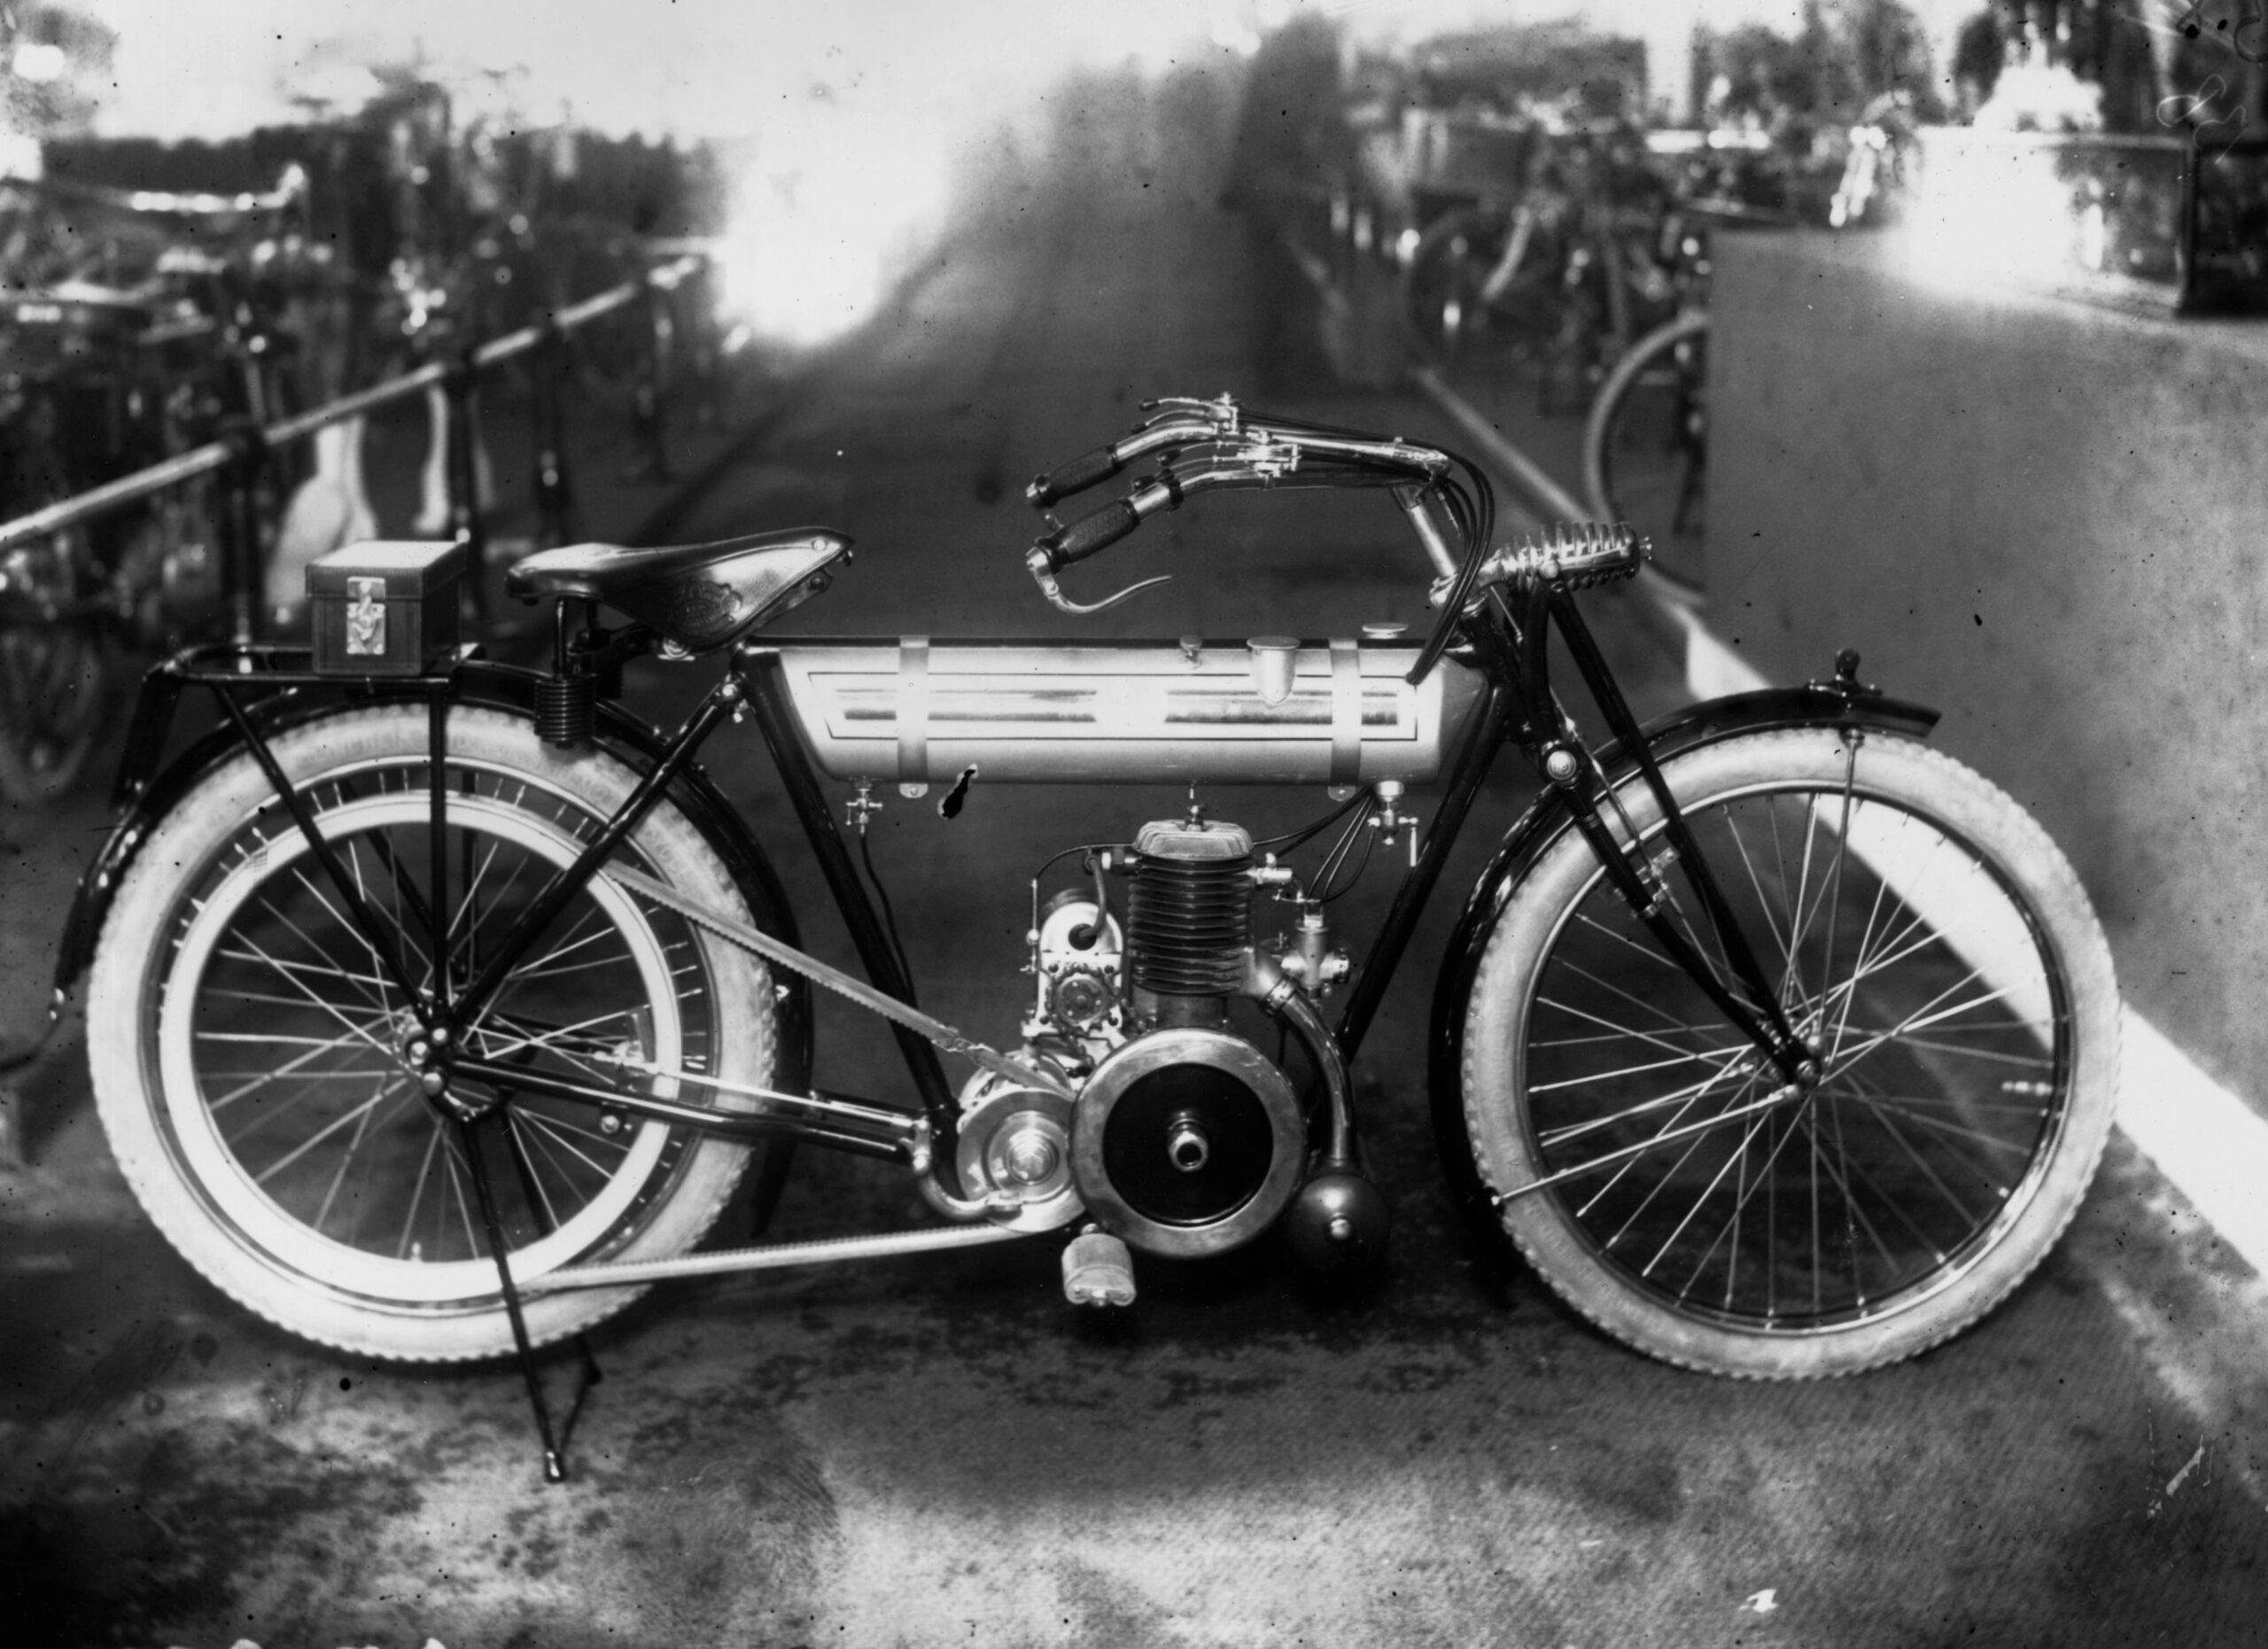 Triumph Bike 1913 London show